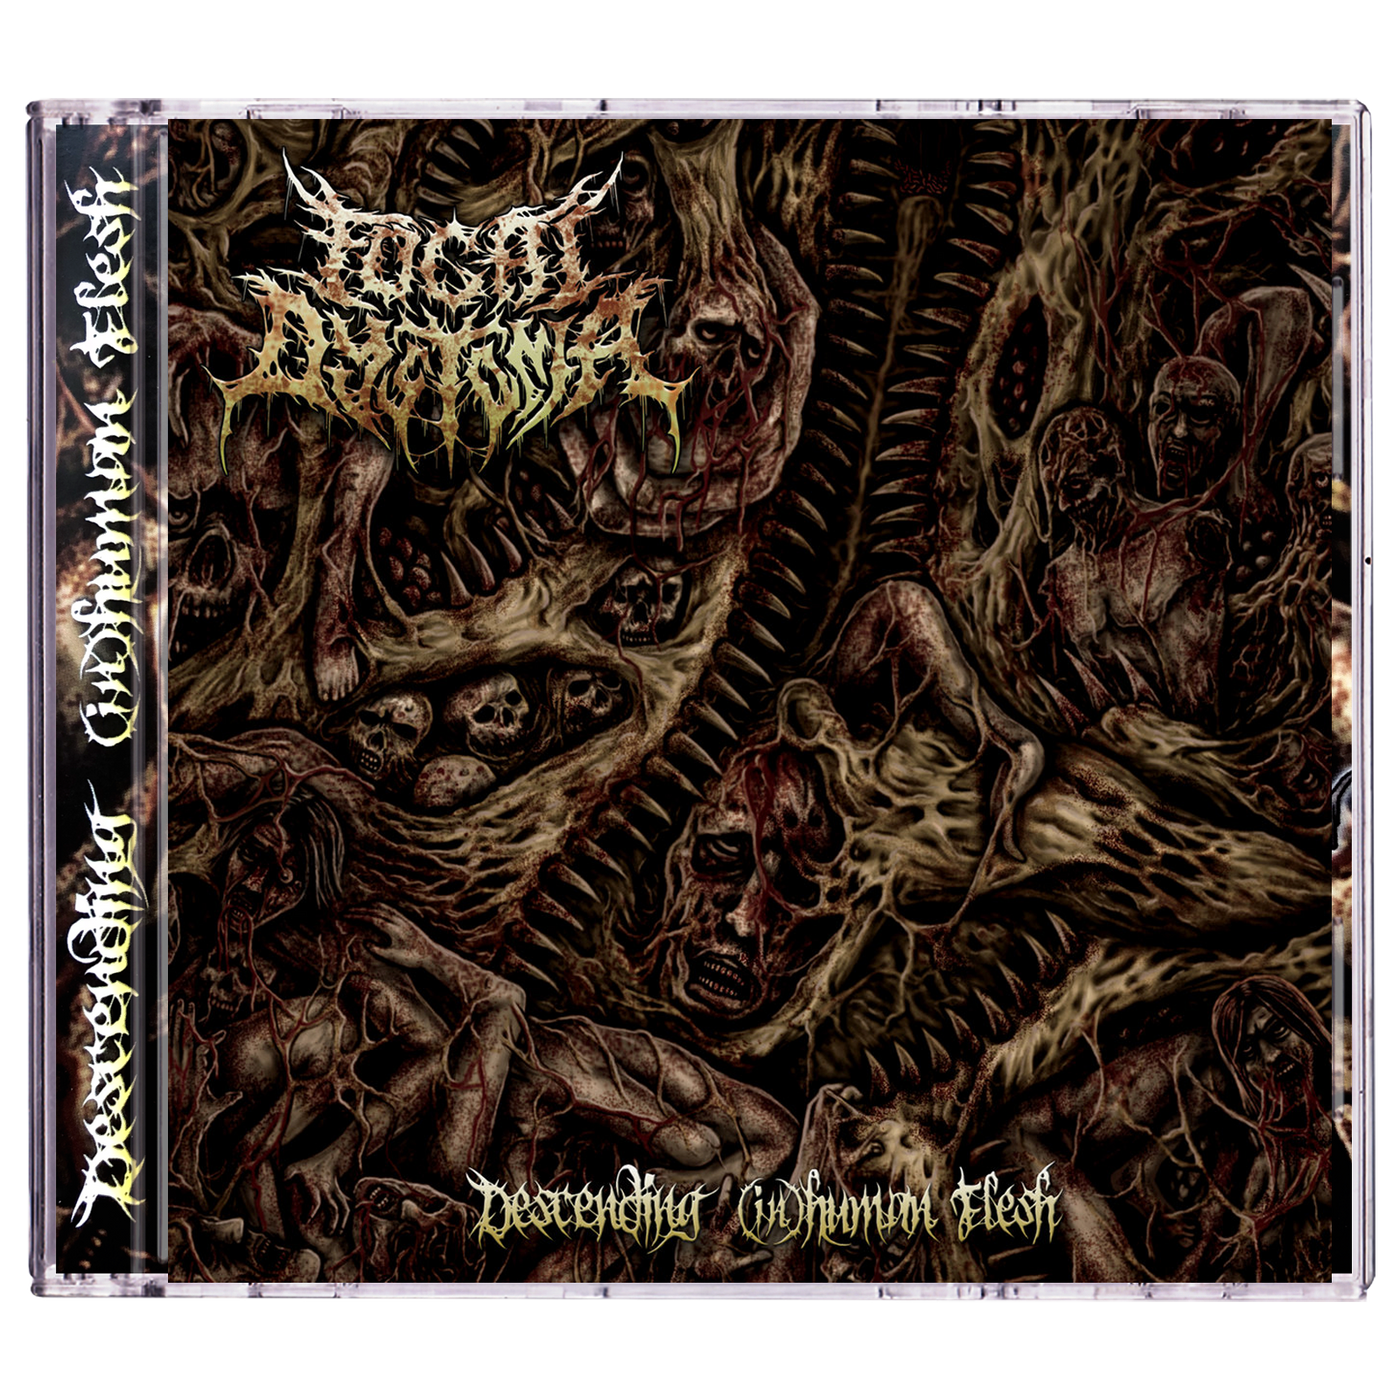 Focal Dystonia 'Descending (in)human Flesh' CD